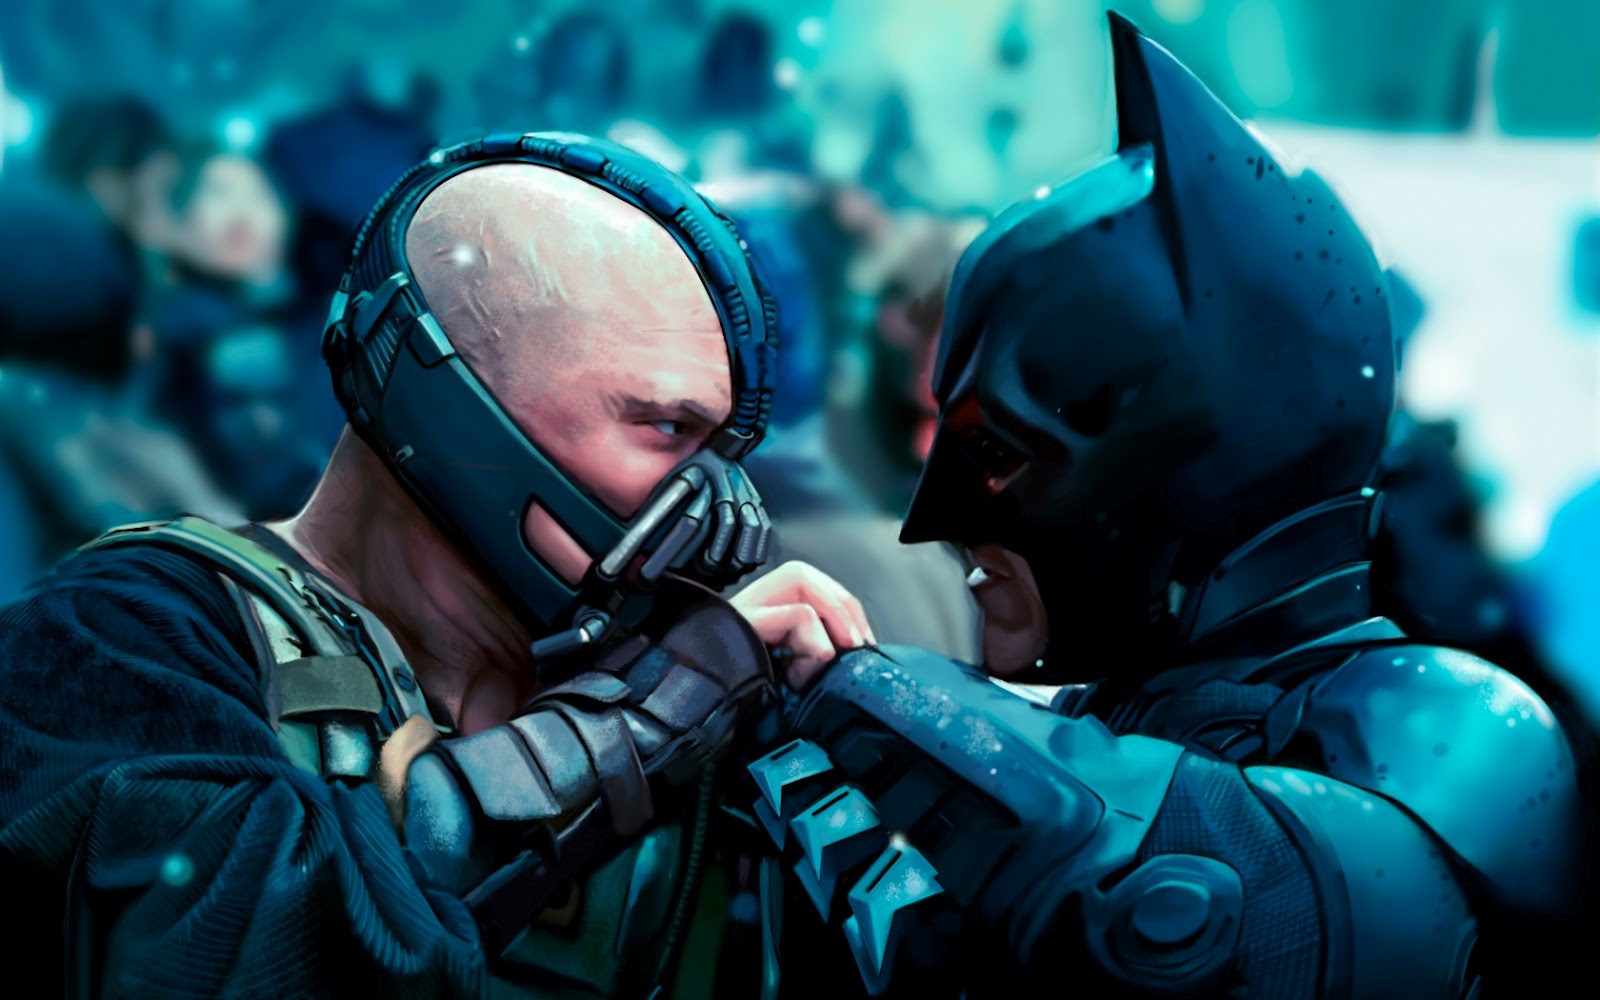 Batman The Dark Knight Rises 2012 HD Poster Wallpapers Download Free